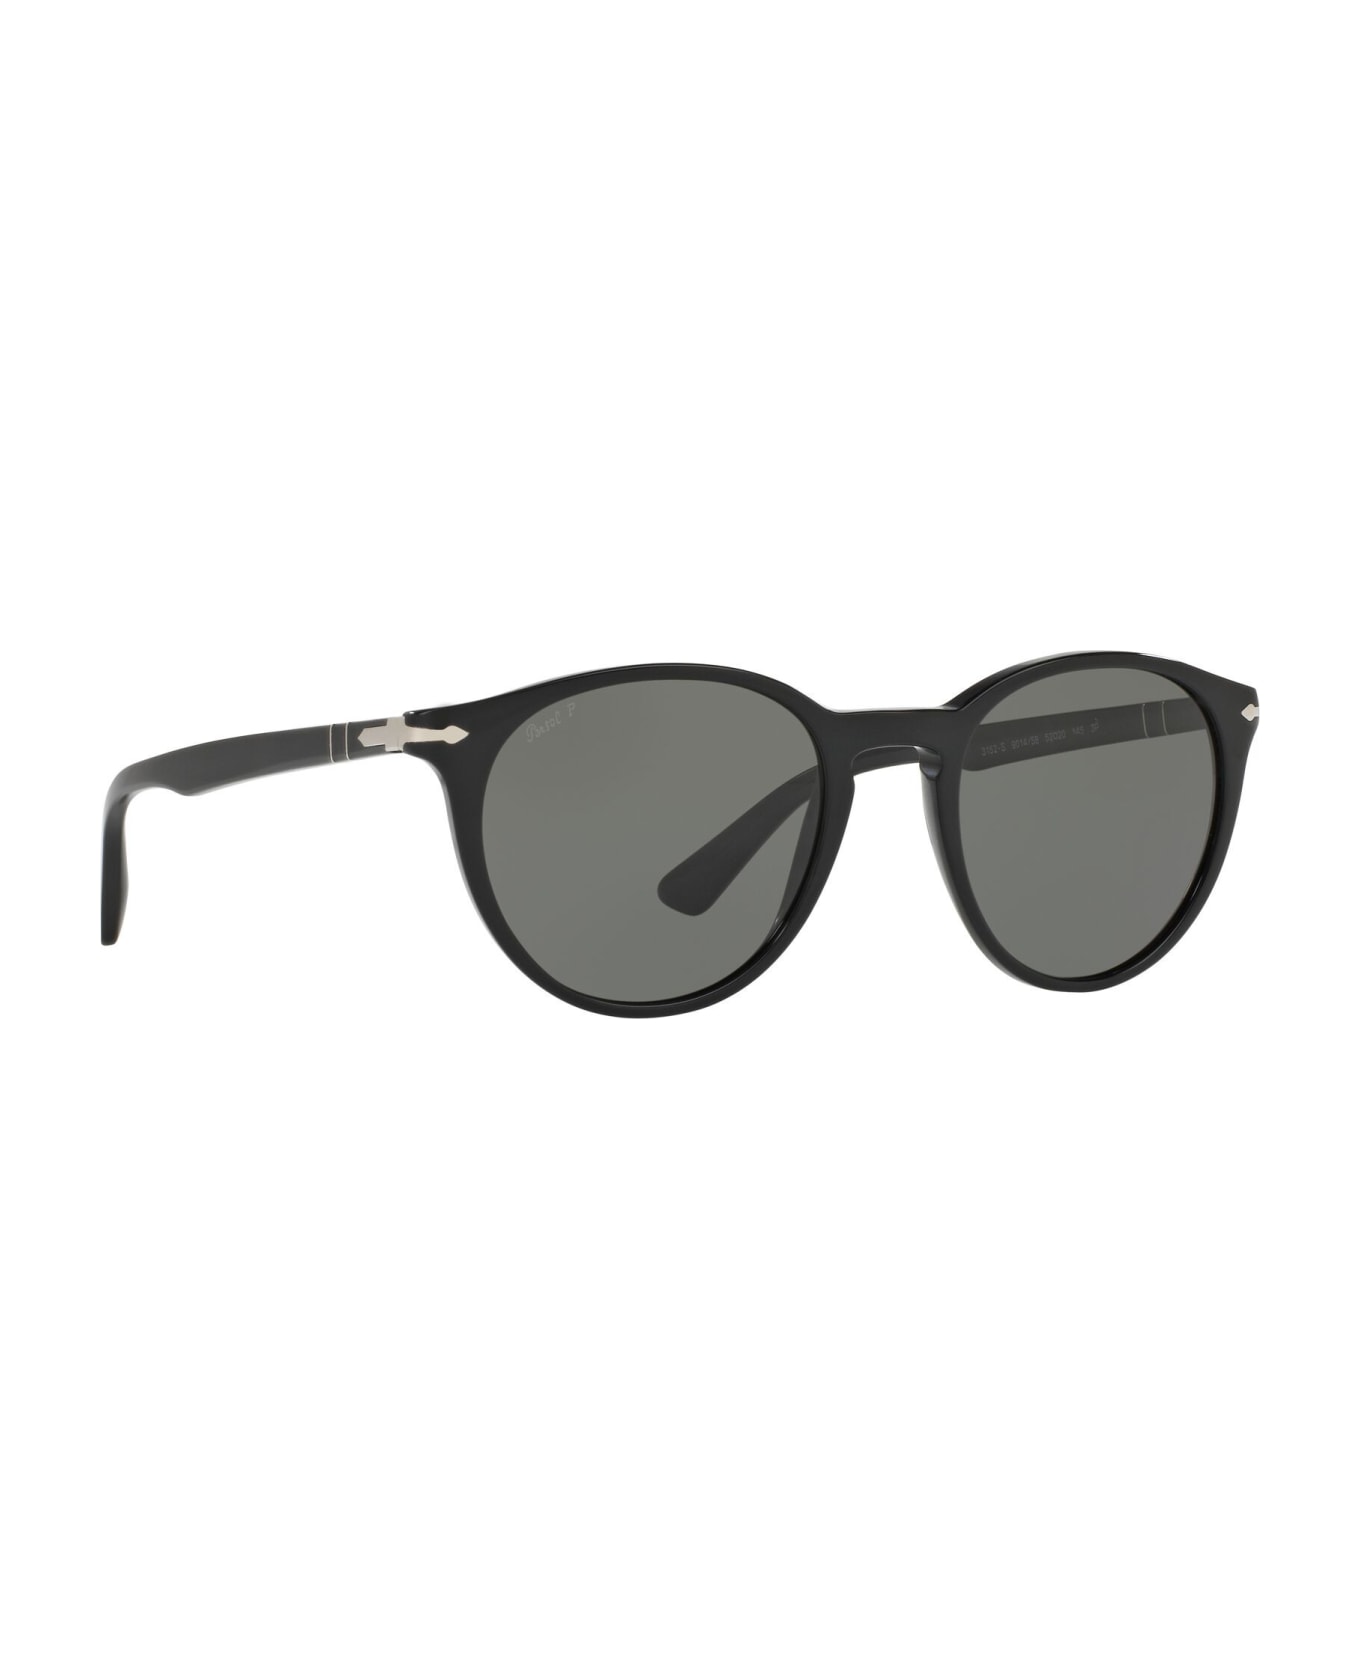 Persol Sunglasses - Nero/Verde サングラス